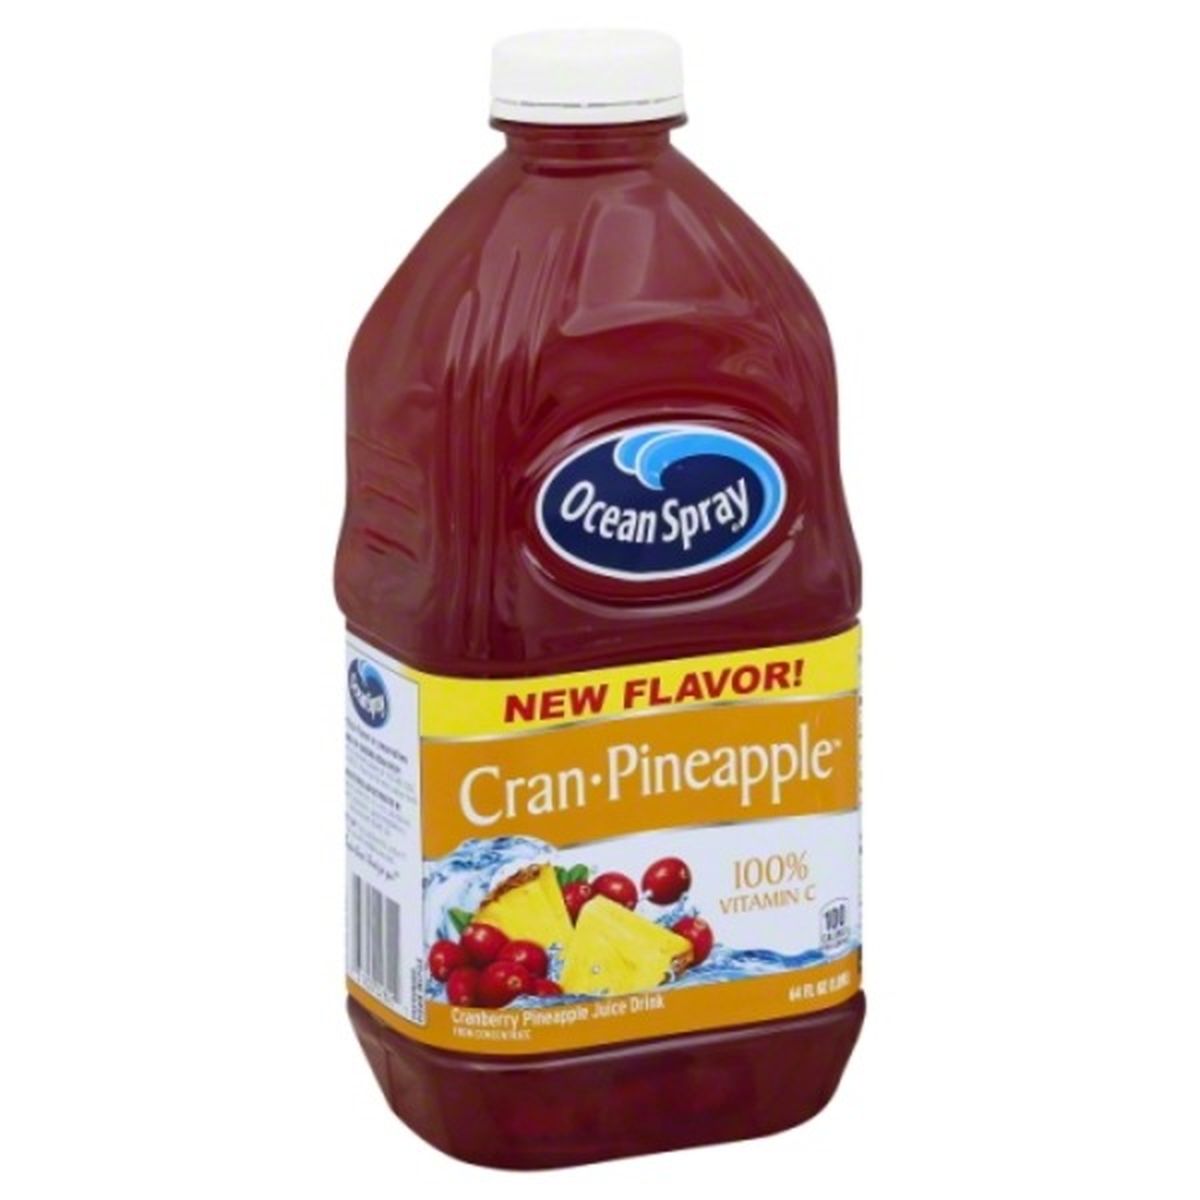 Calories in Ocean Spray Juice Drink, Cran Pineapple